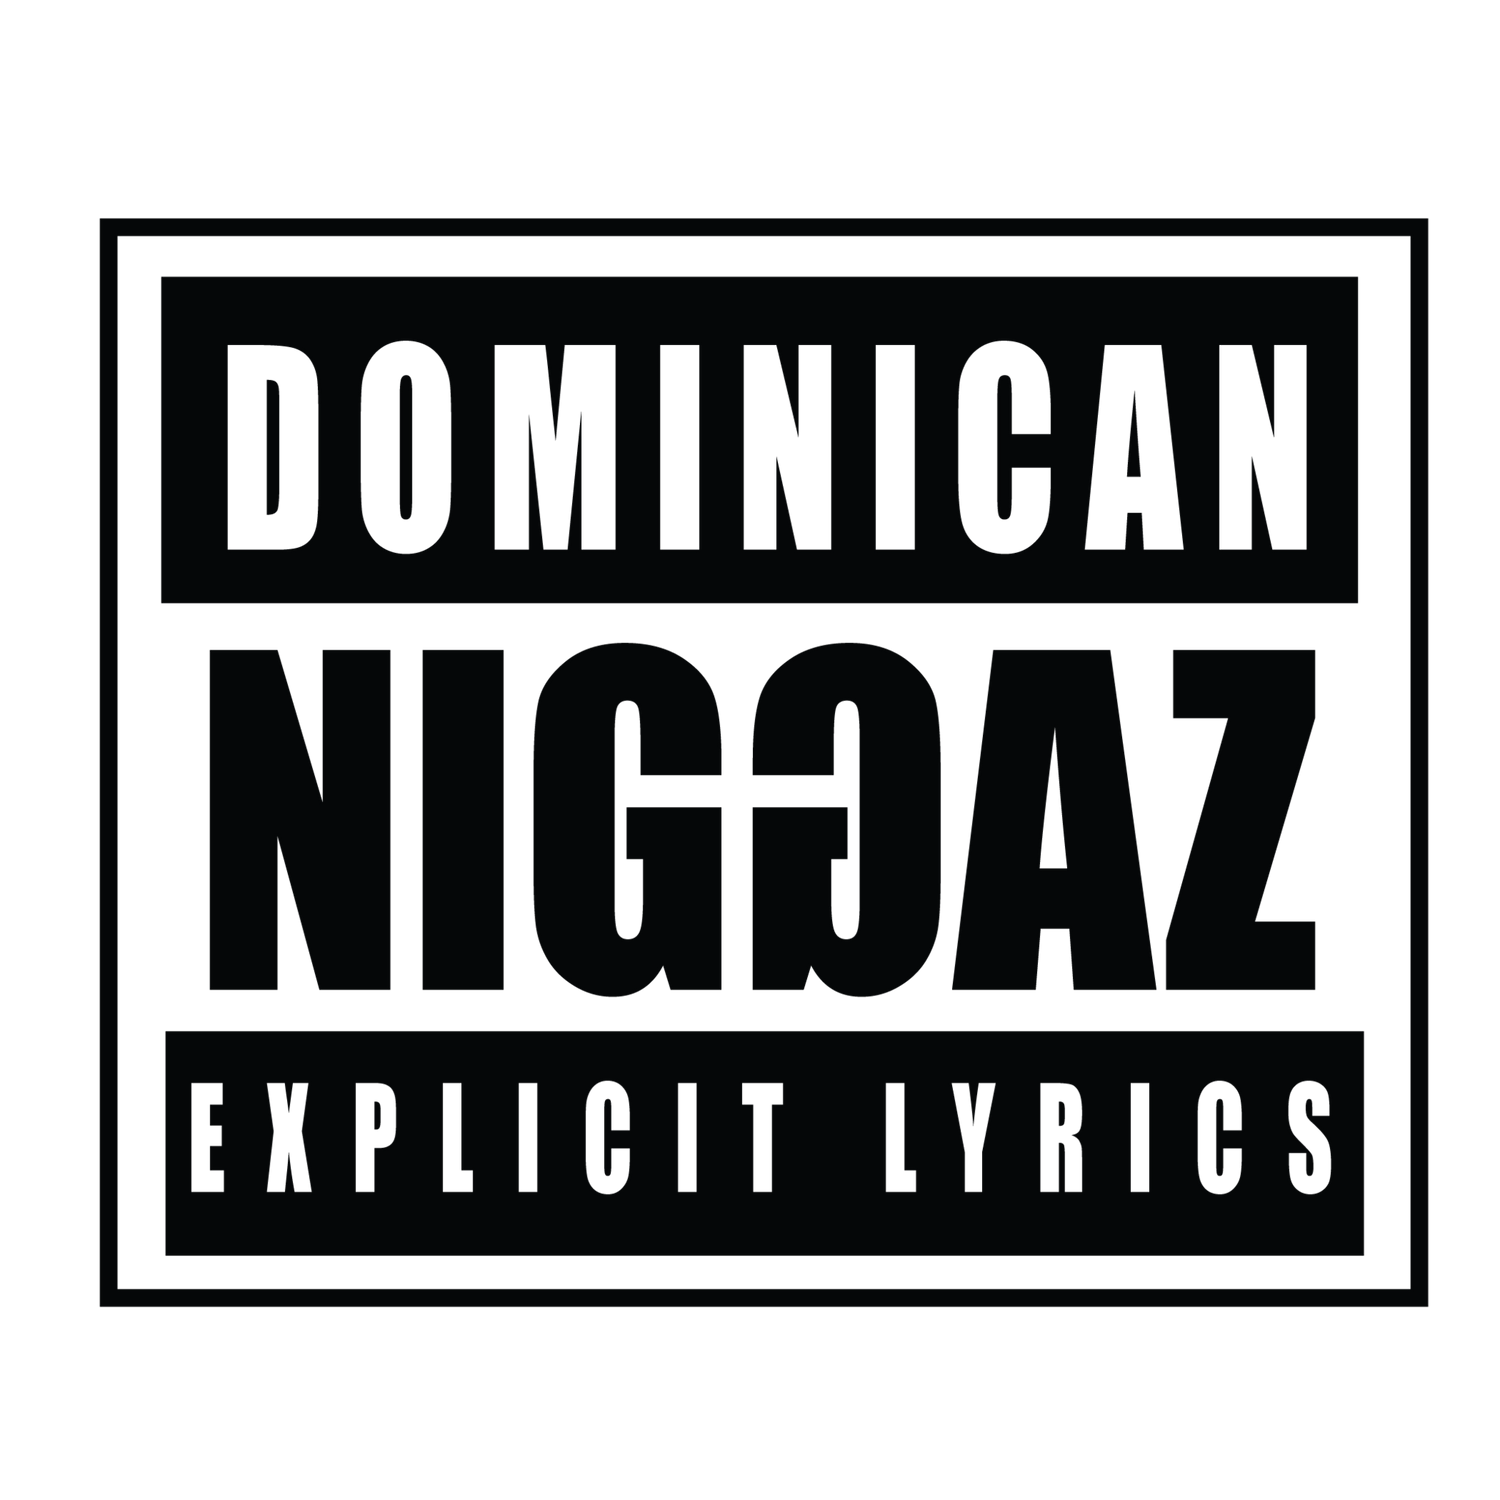 DOMINICAN NIGGAZ